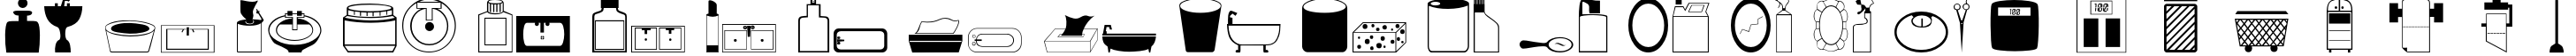 Пример написания английского алфавита шрифтом Hygiene